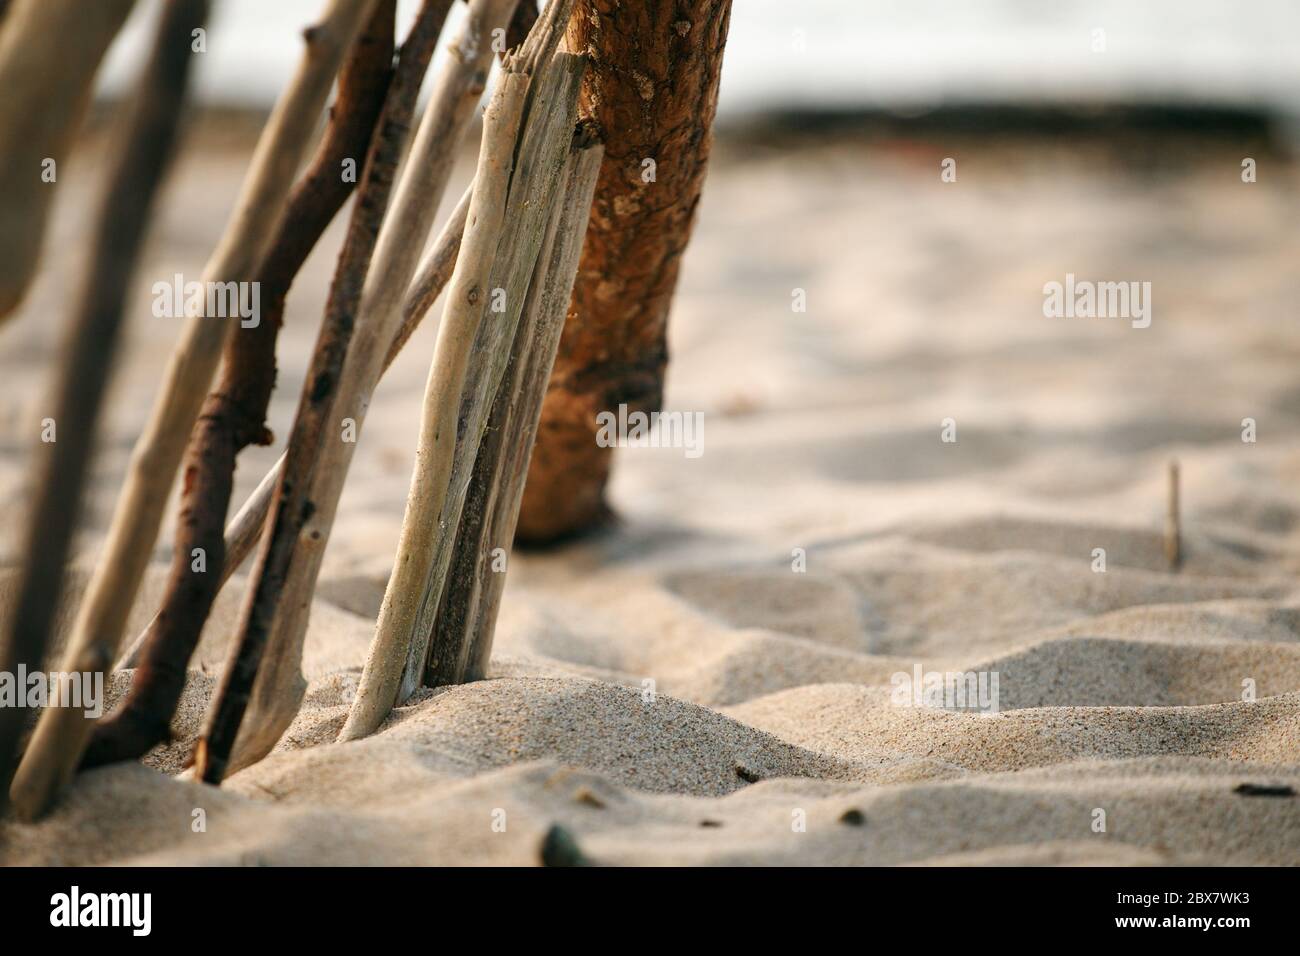 Ocean landscape with minimalism design of wooden sticks, summer, abstract meditation calming zen-like concept Stock Photo